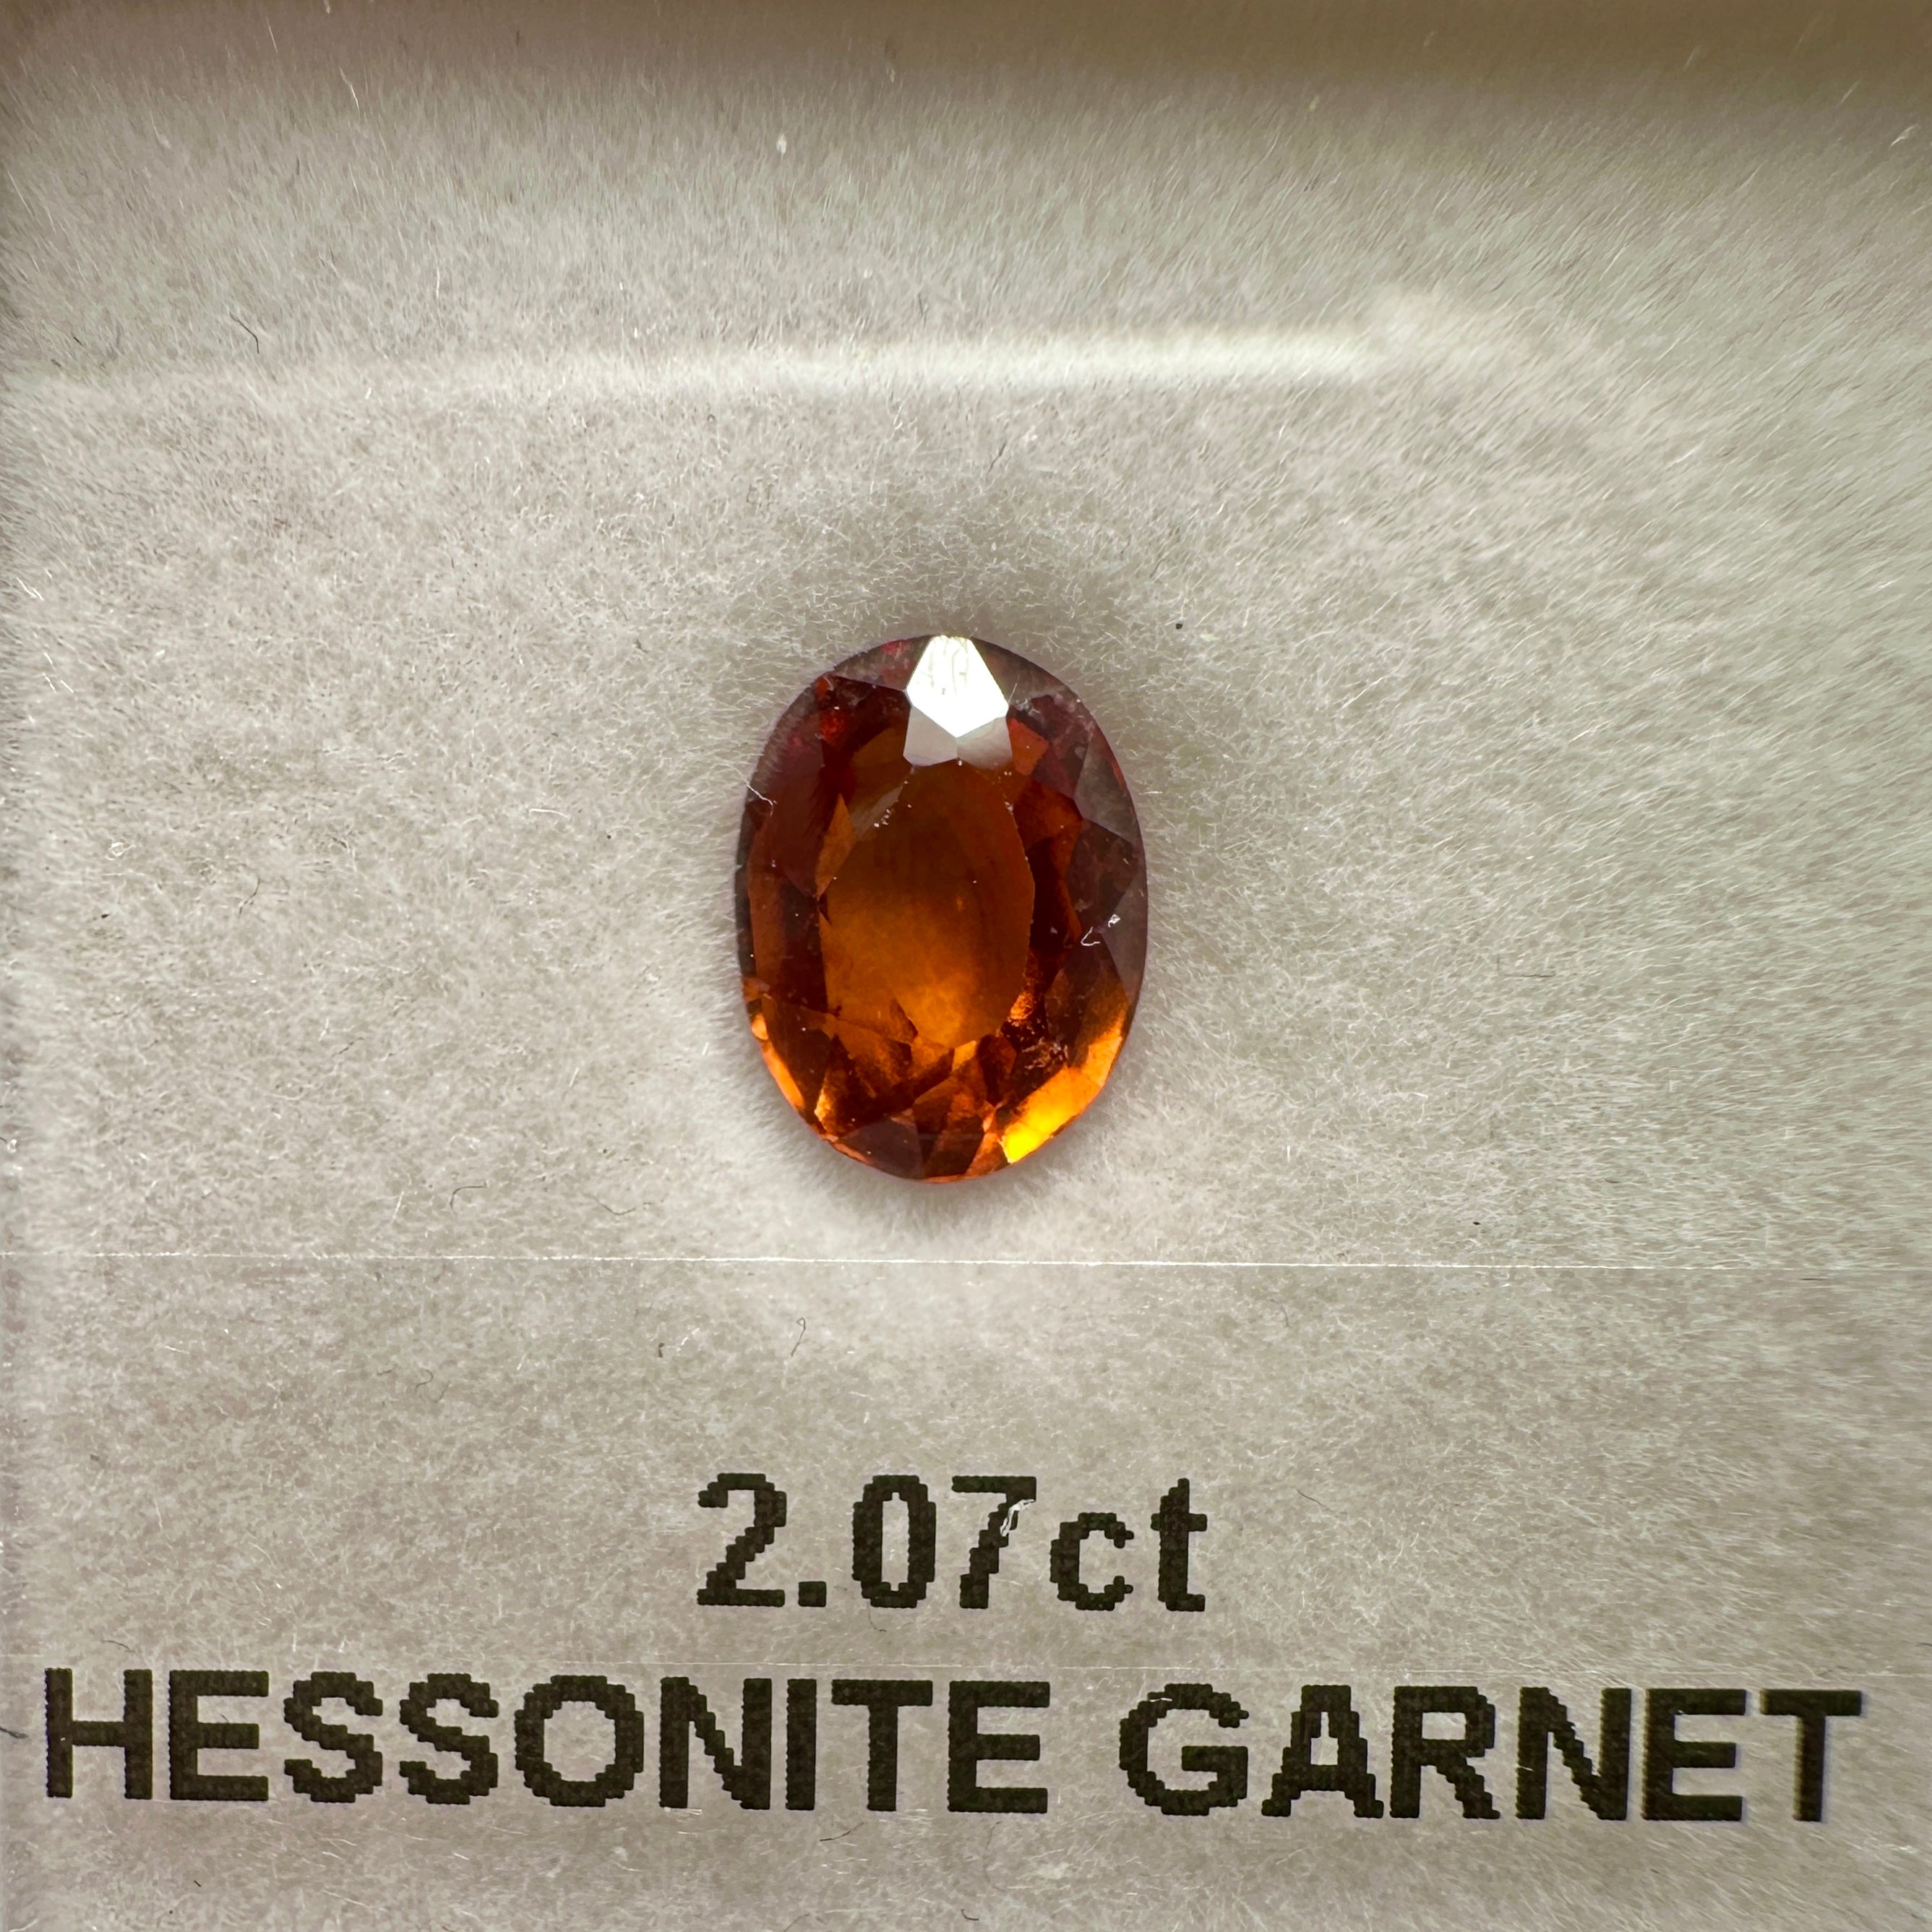 2.07ct Hessonite Garnet, Untreated Unheated, native cut